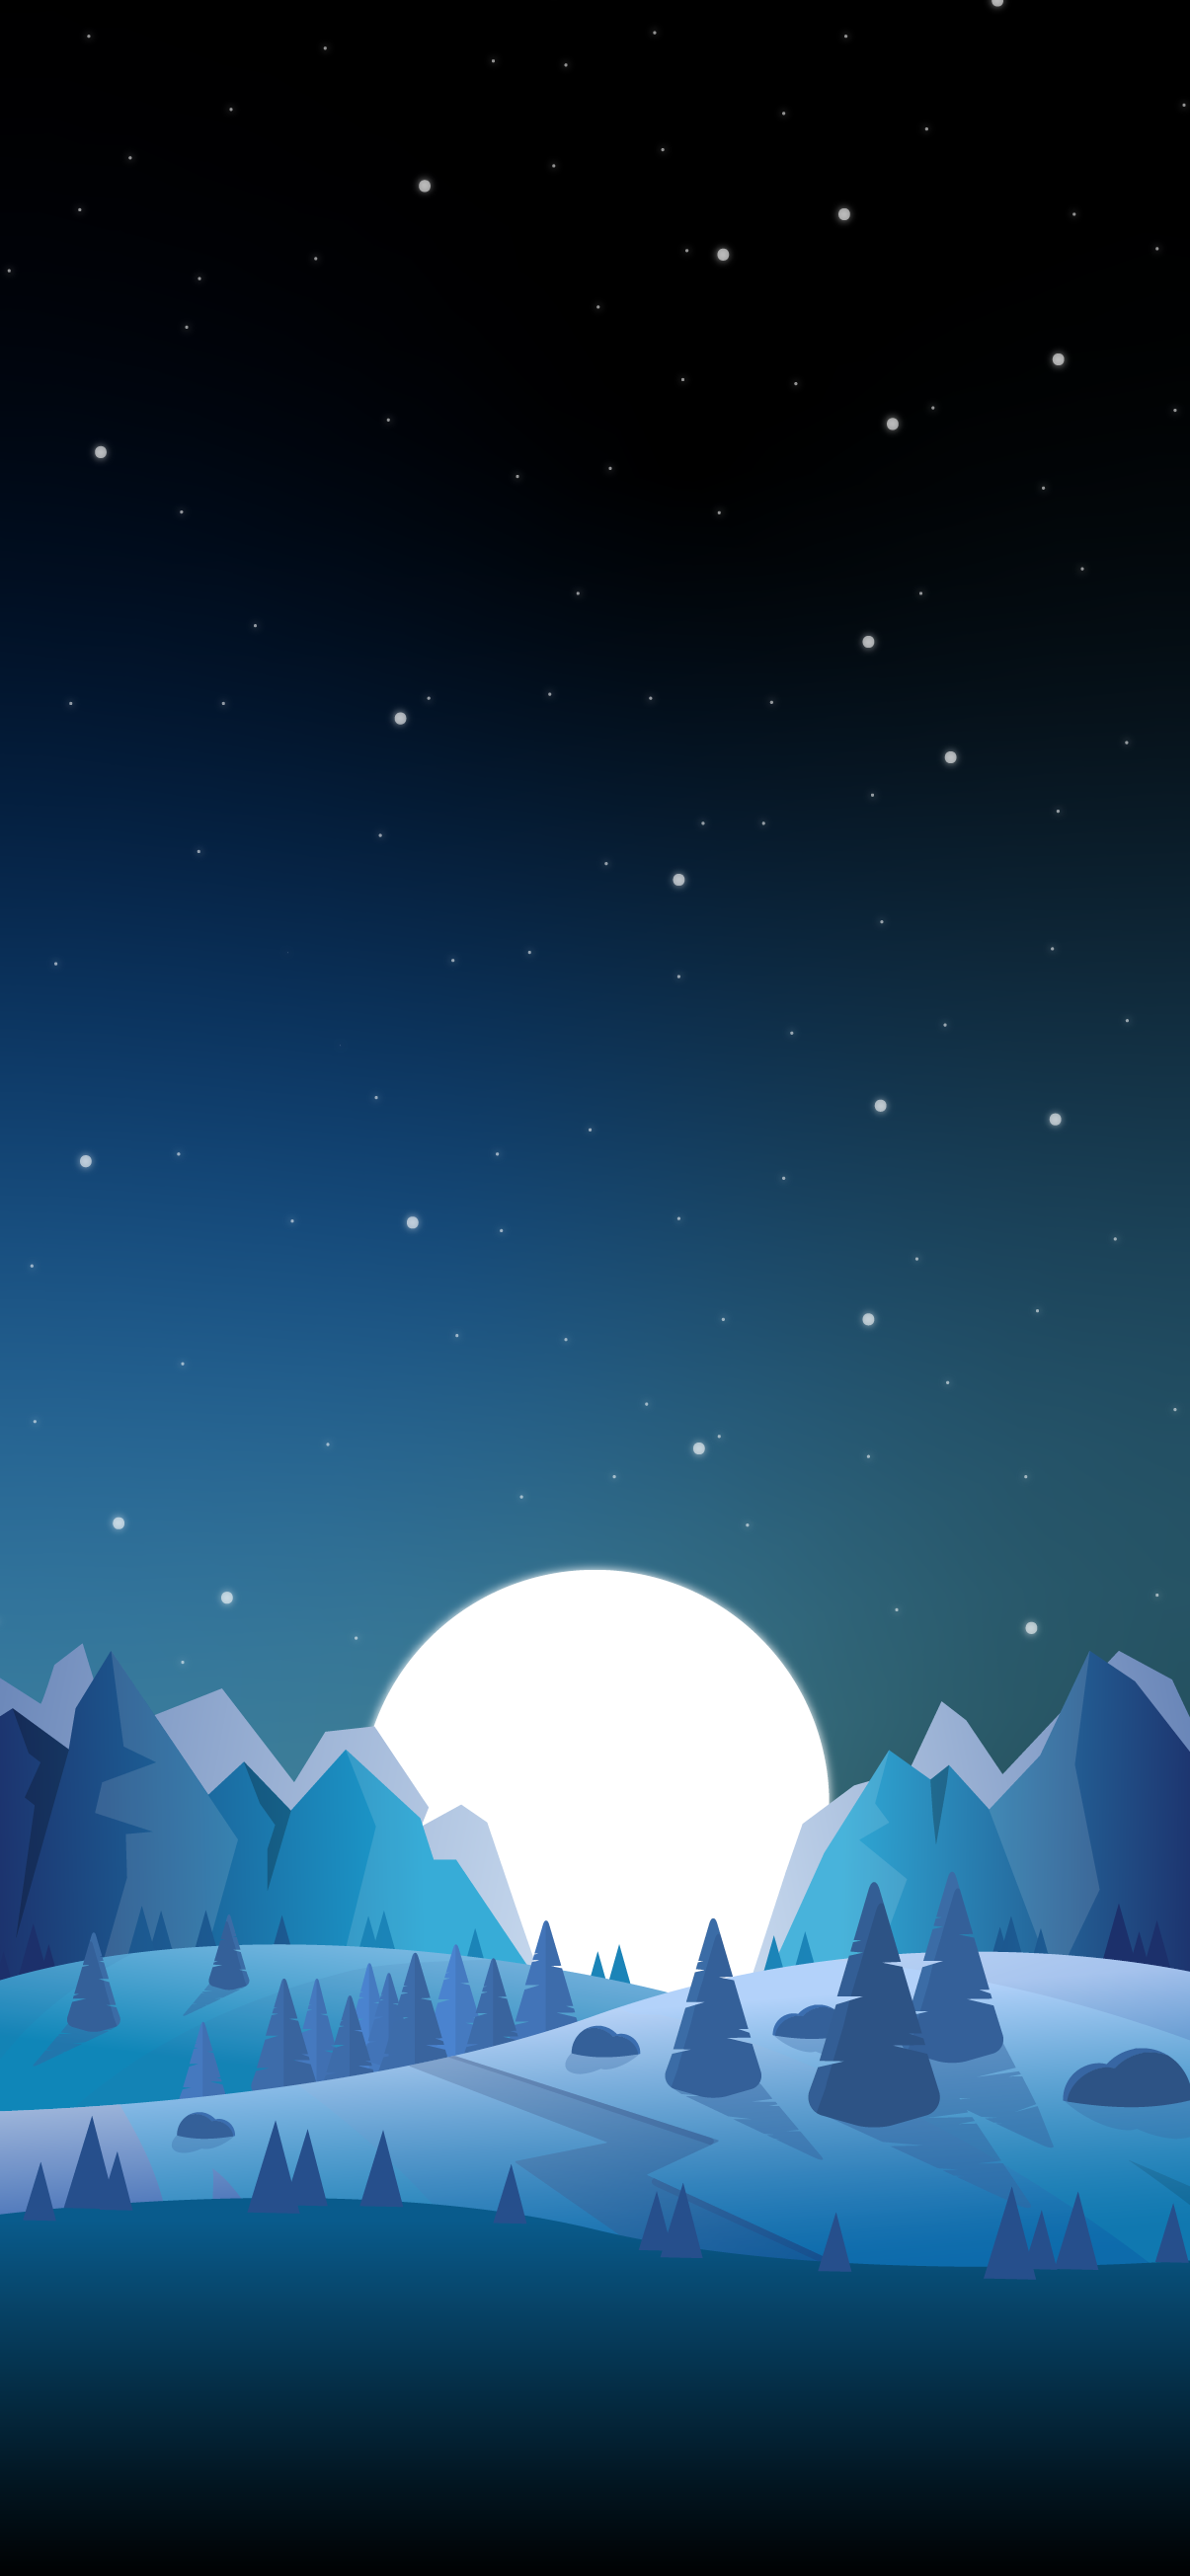 Cool iphone wallpaper moon night